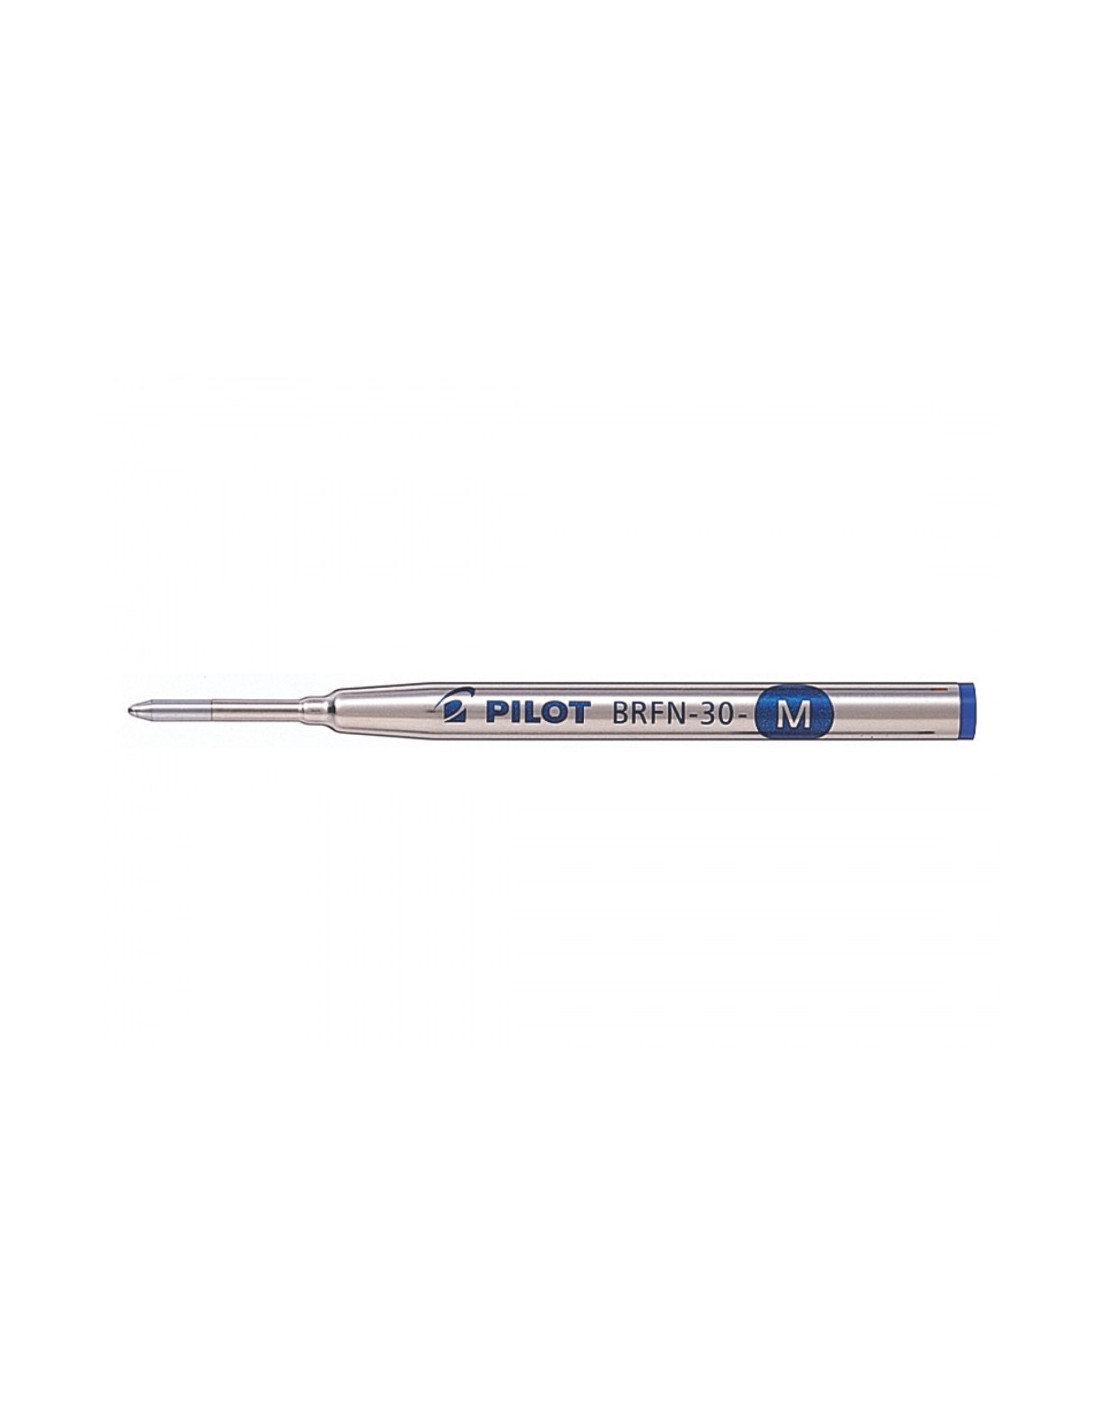 Refill BRFN-30 for ballpoint pen Pilot - Blue - Medium tip